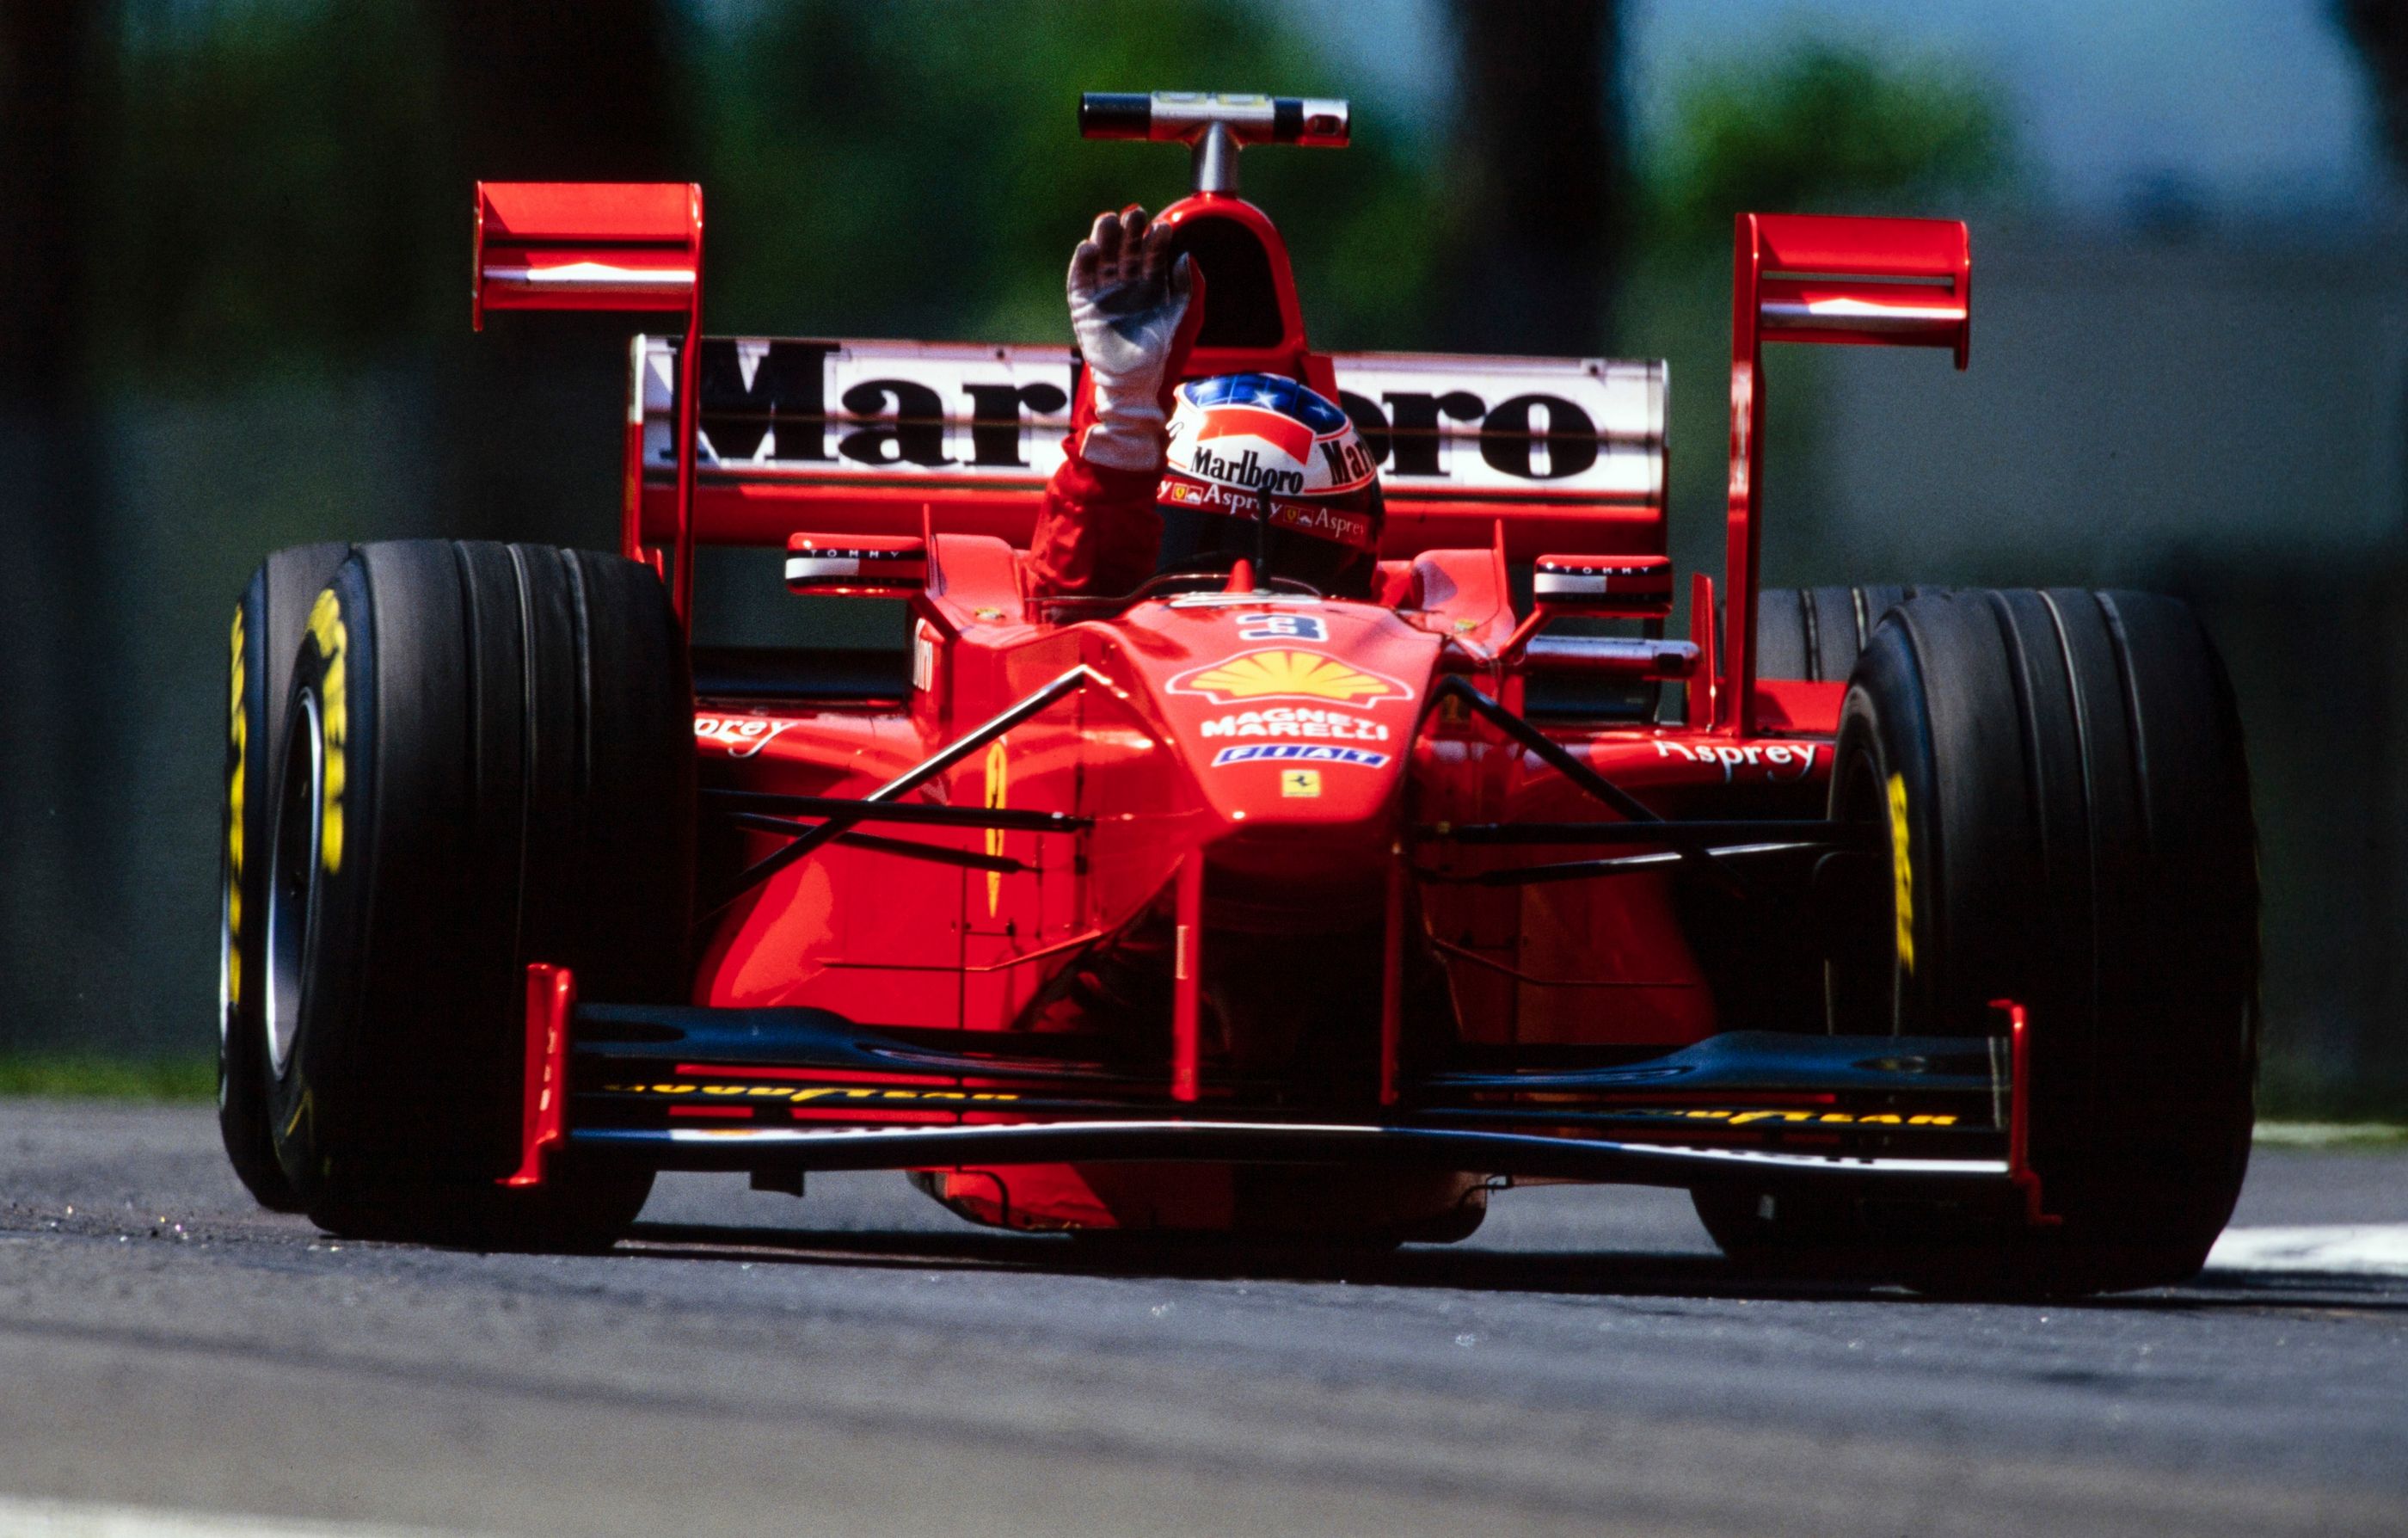 2800x1788, 537 Kb / Шумахер, Michael Schumacher, автомобиль, Ferrari, формула 1, marlboro, красный